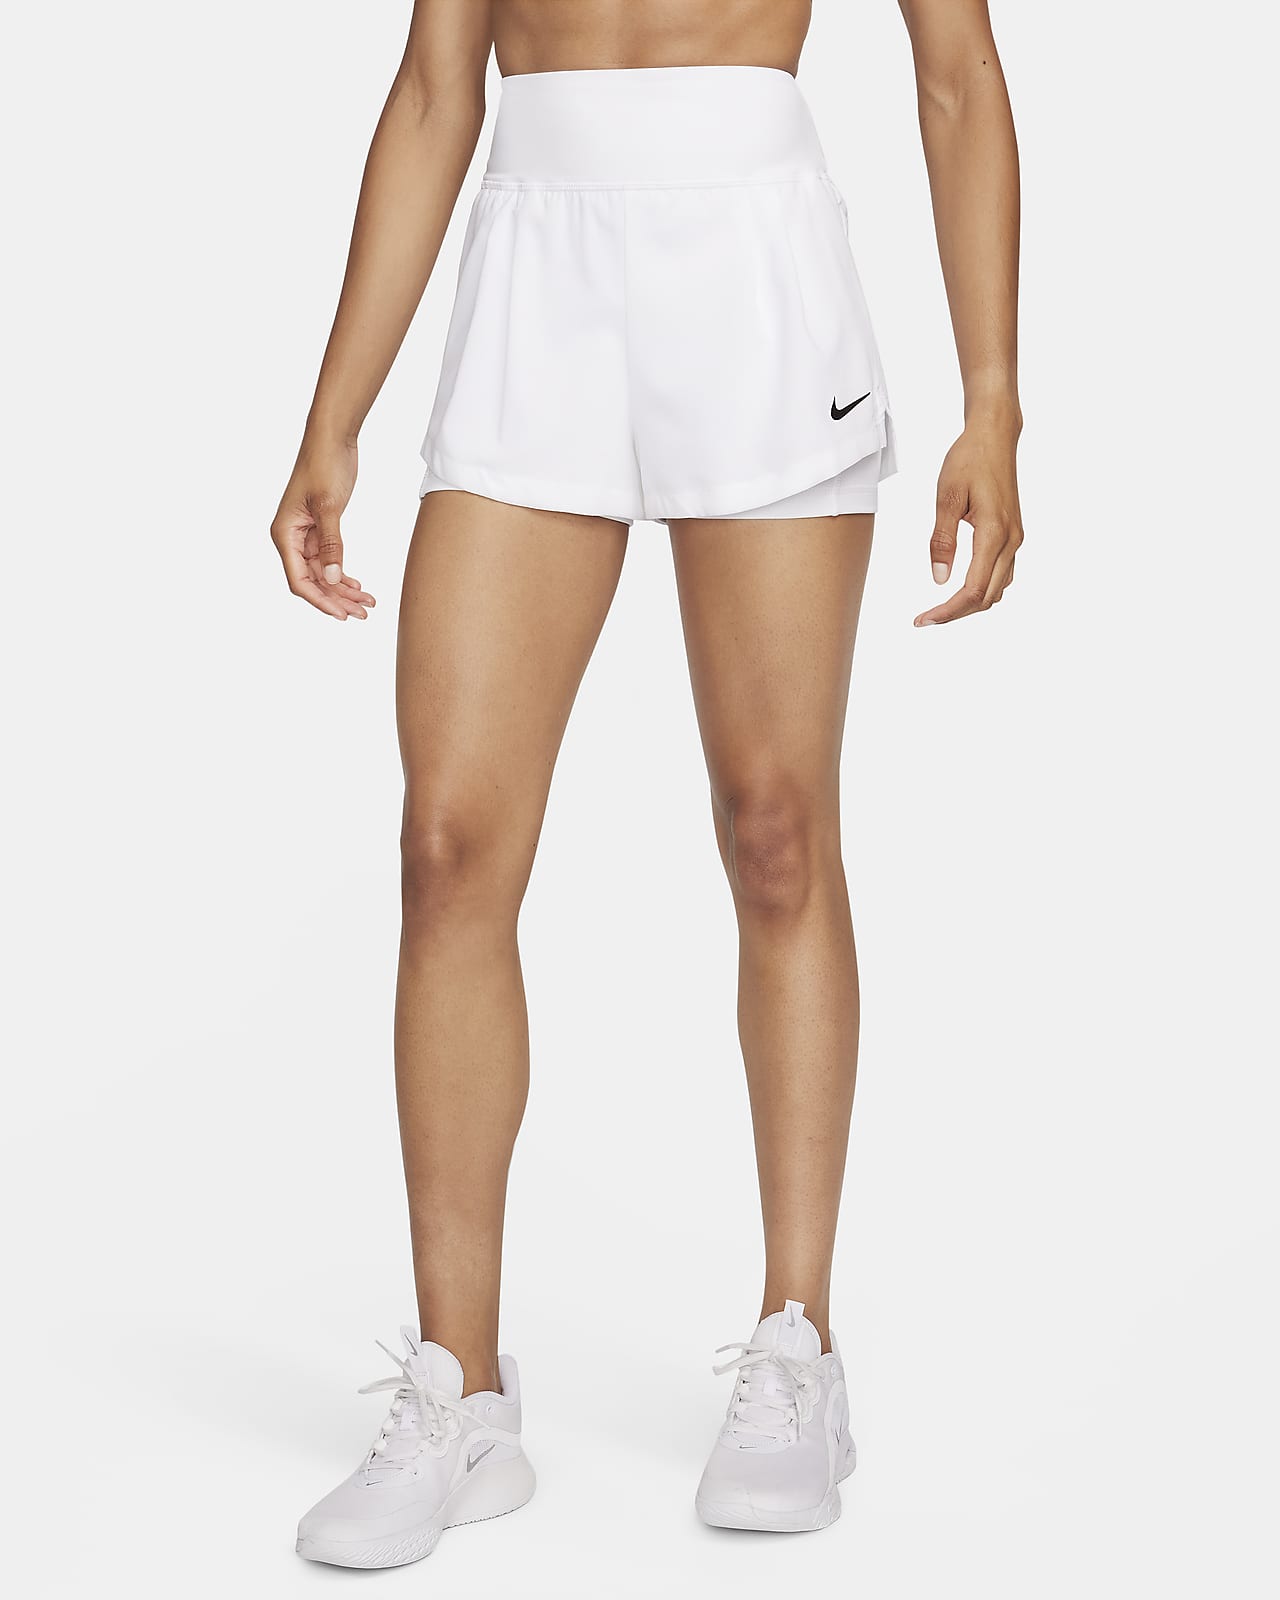 NikeCourt Advantage Dri-FIT tennisshorts til dame